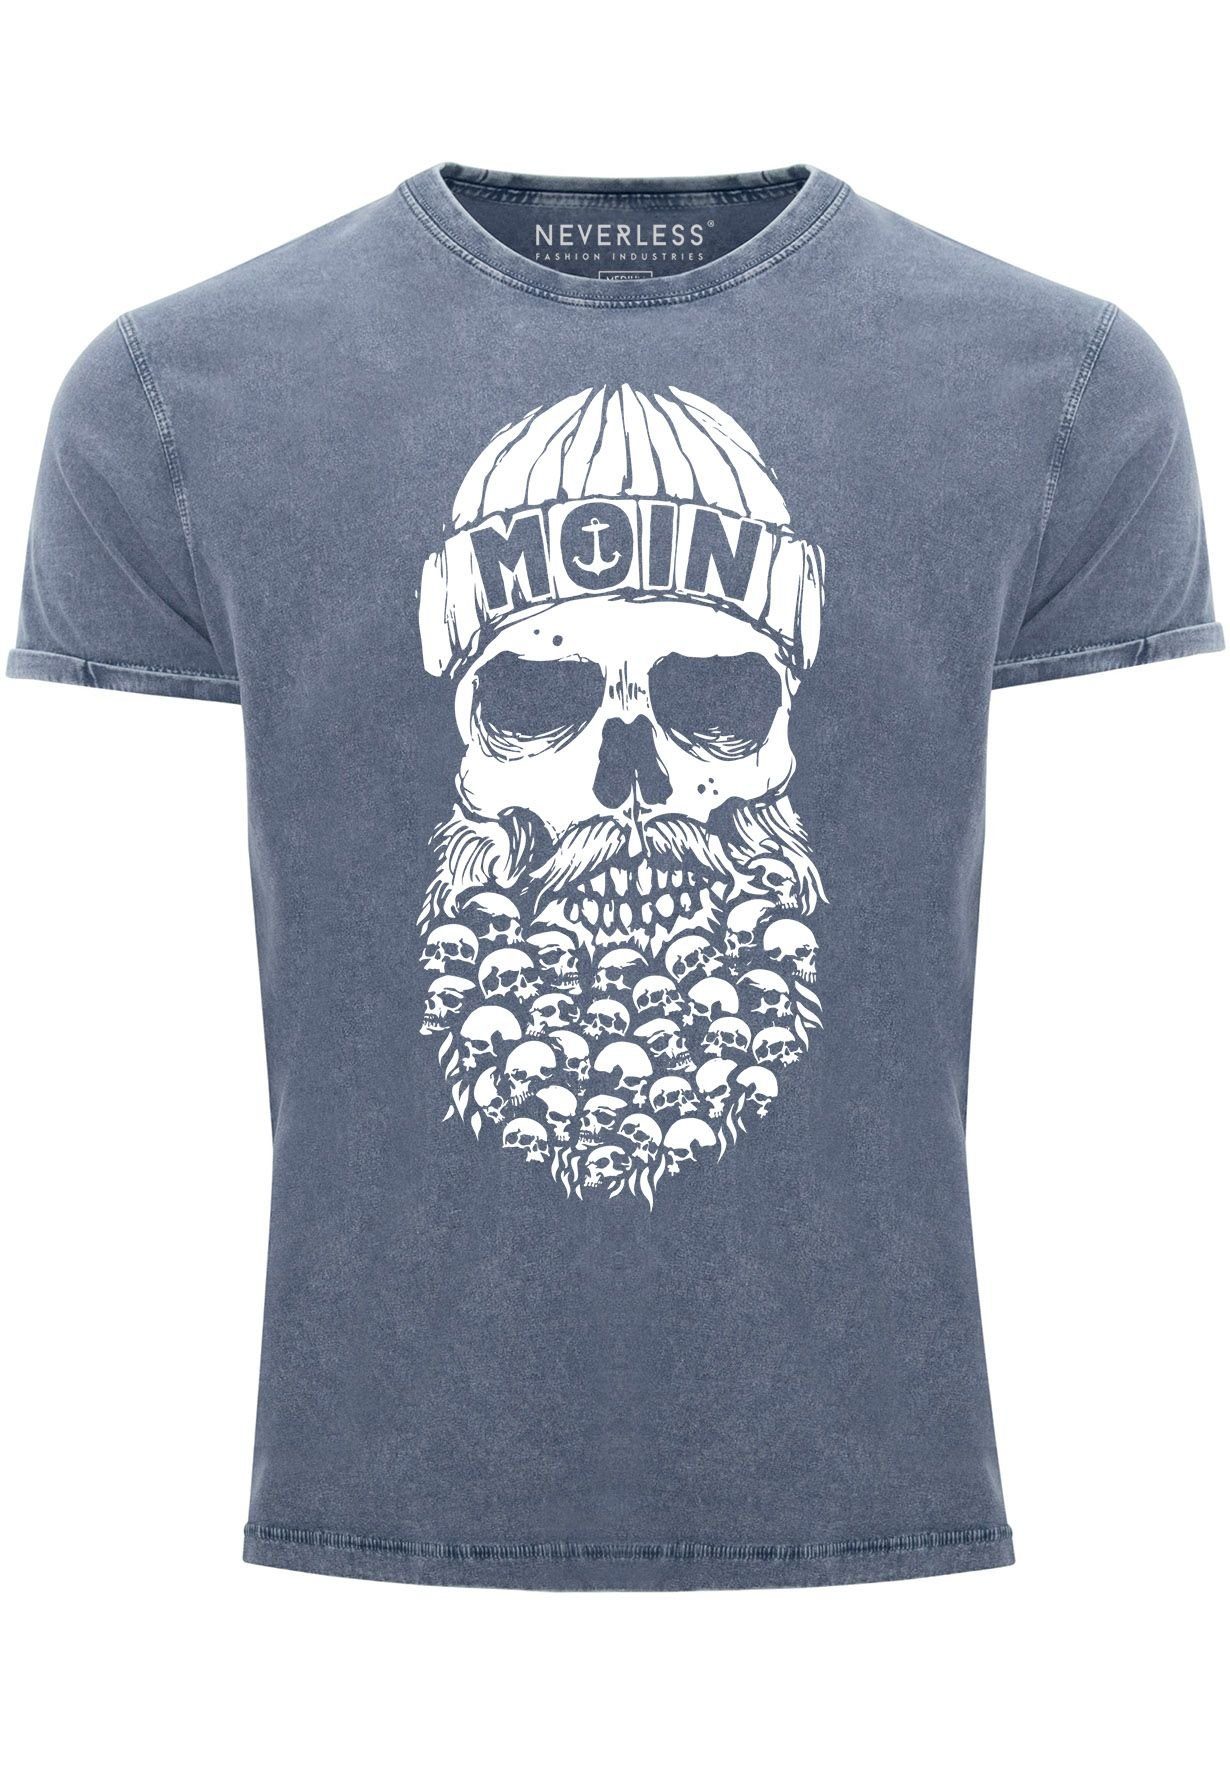 Neverless Print-Shirt blau Herren Ank Nordisch Dialekt mit Hamburg Shirt Skull Print Vintage Moin Totenkopf